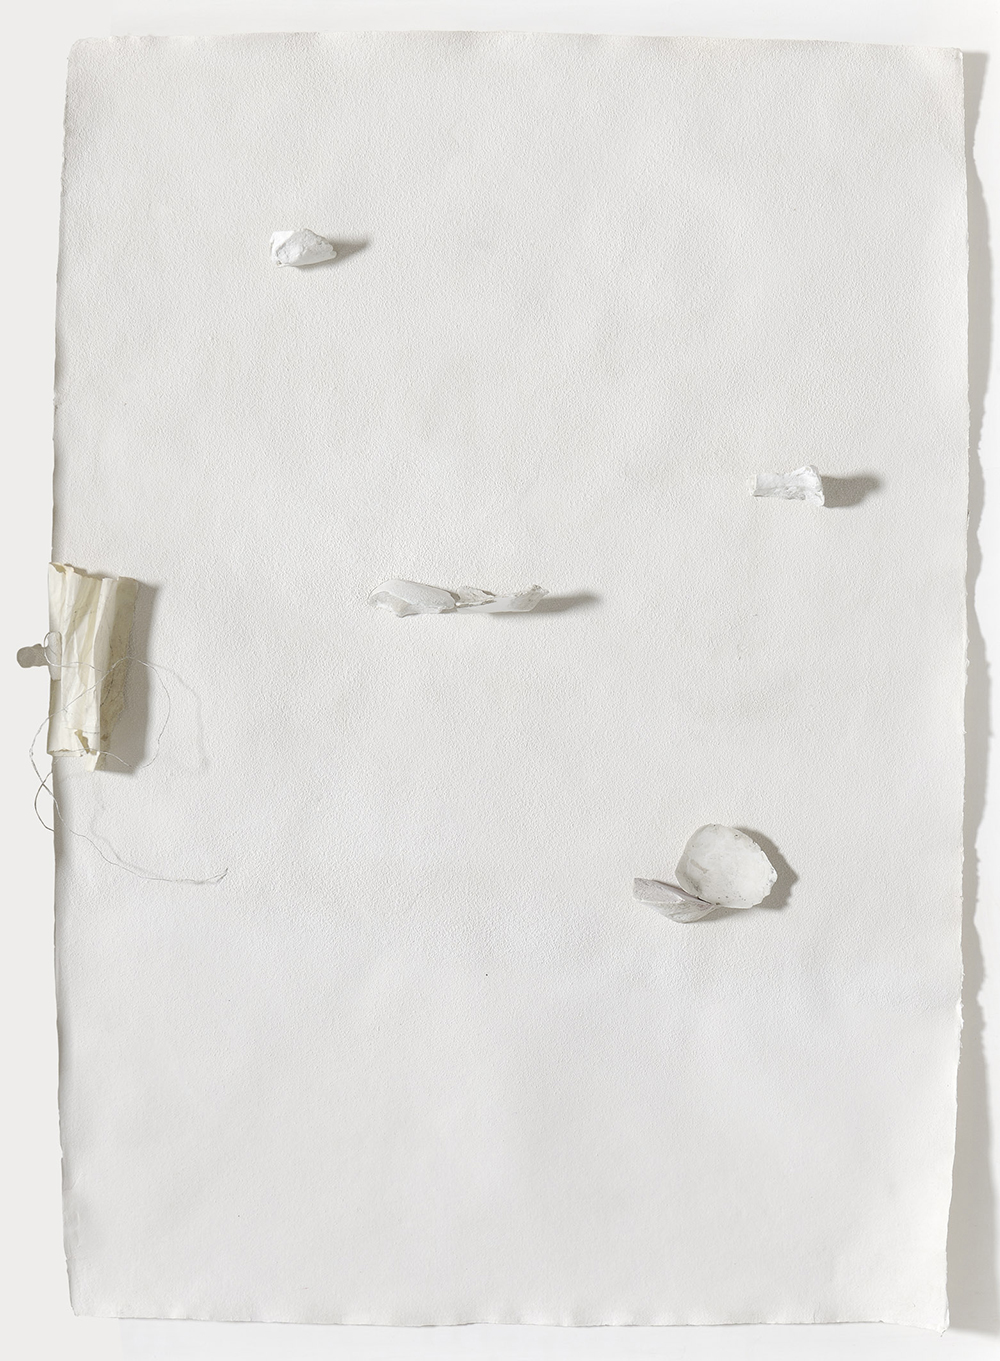 Museo ideale, 2011, tecnica mista su carta e scagliola, cm 134x94